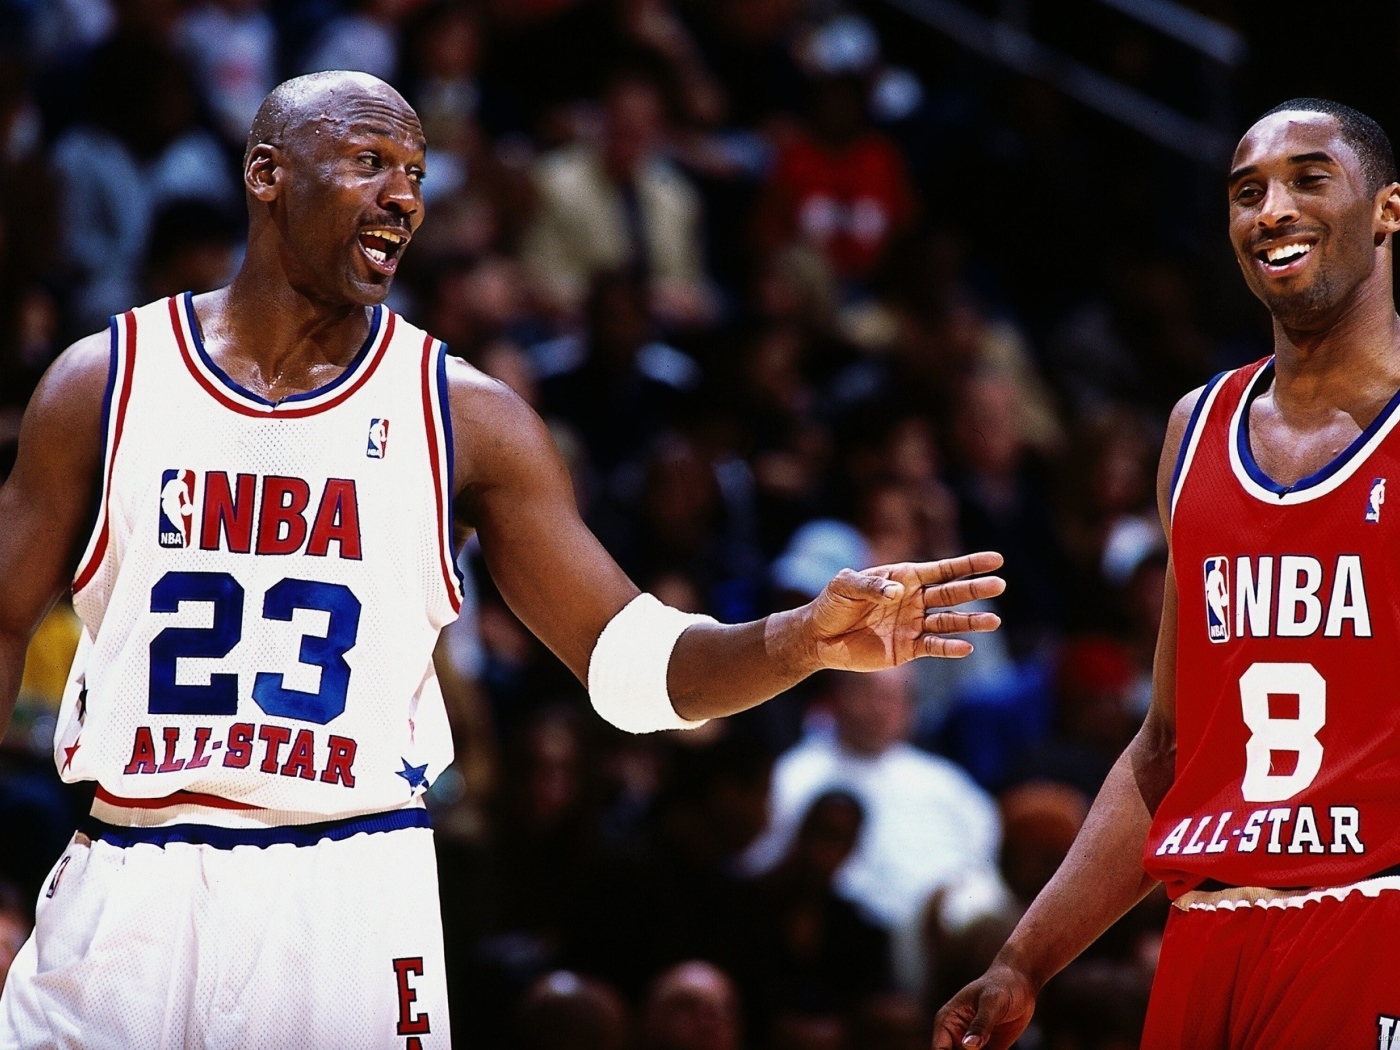 Basketball player Michael Jordan and Kobe Bryant, NBA